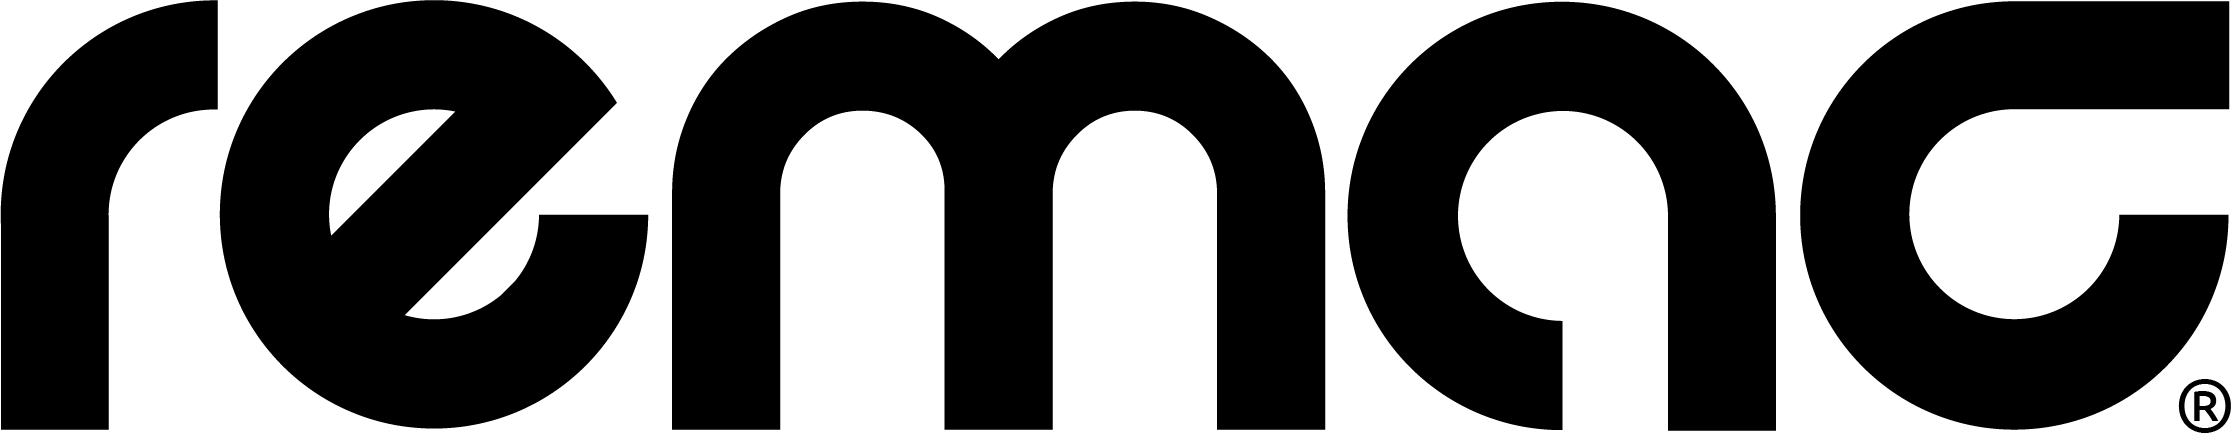 logotipo-remac